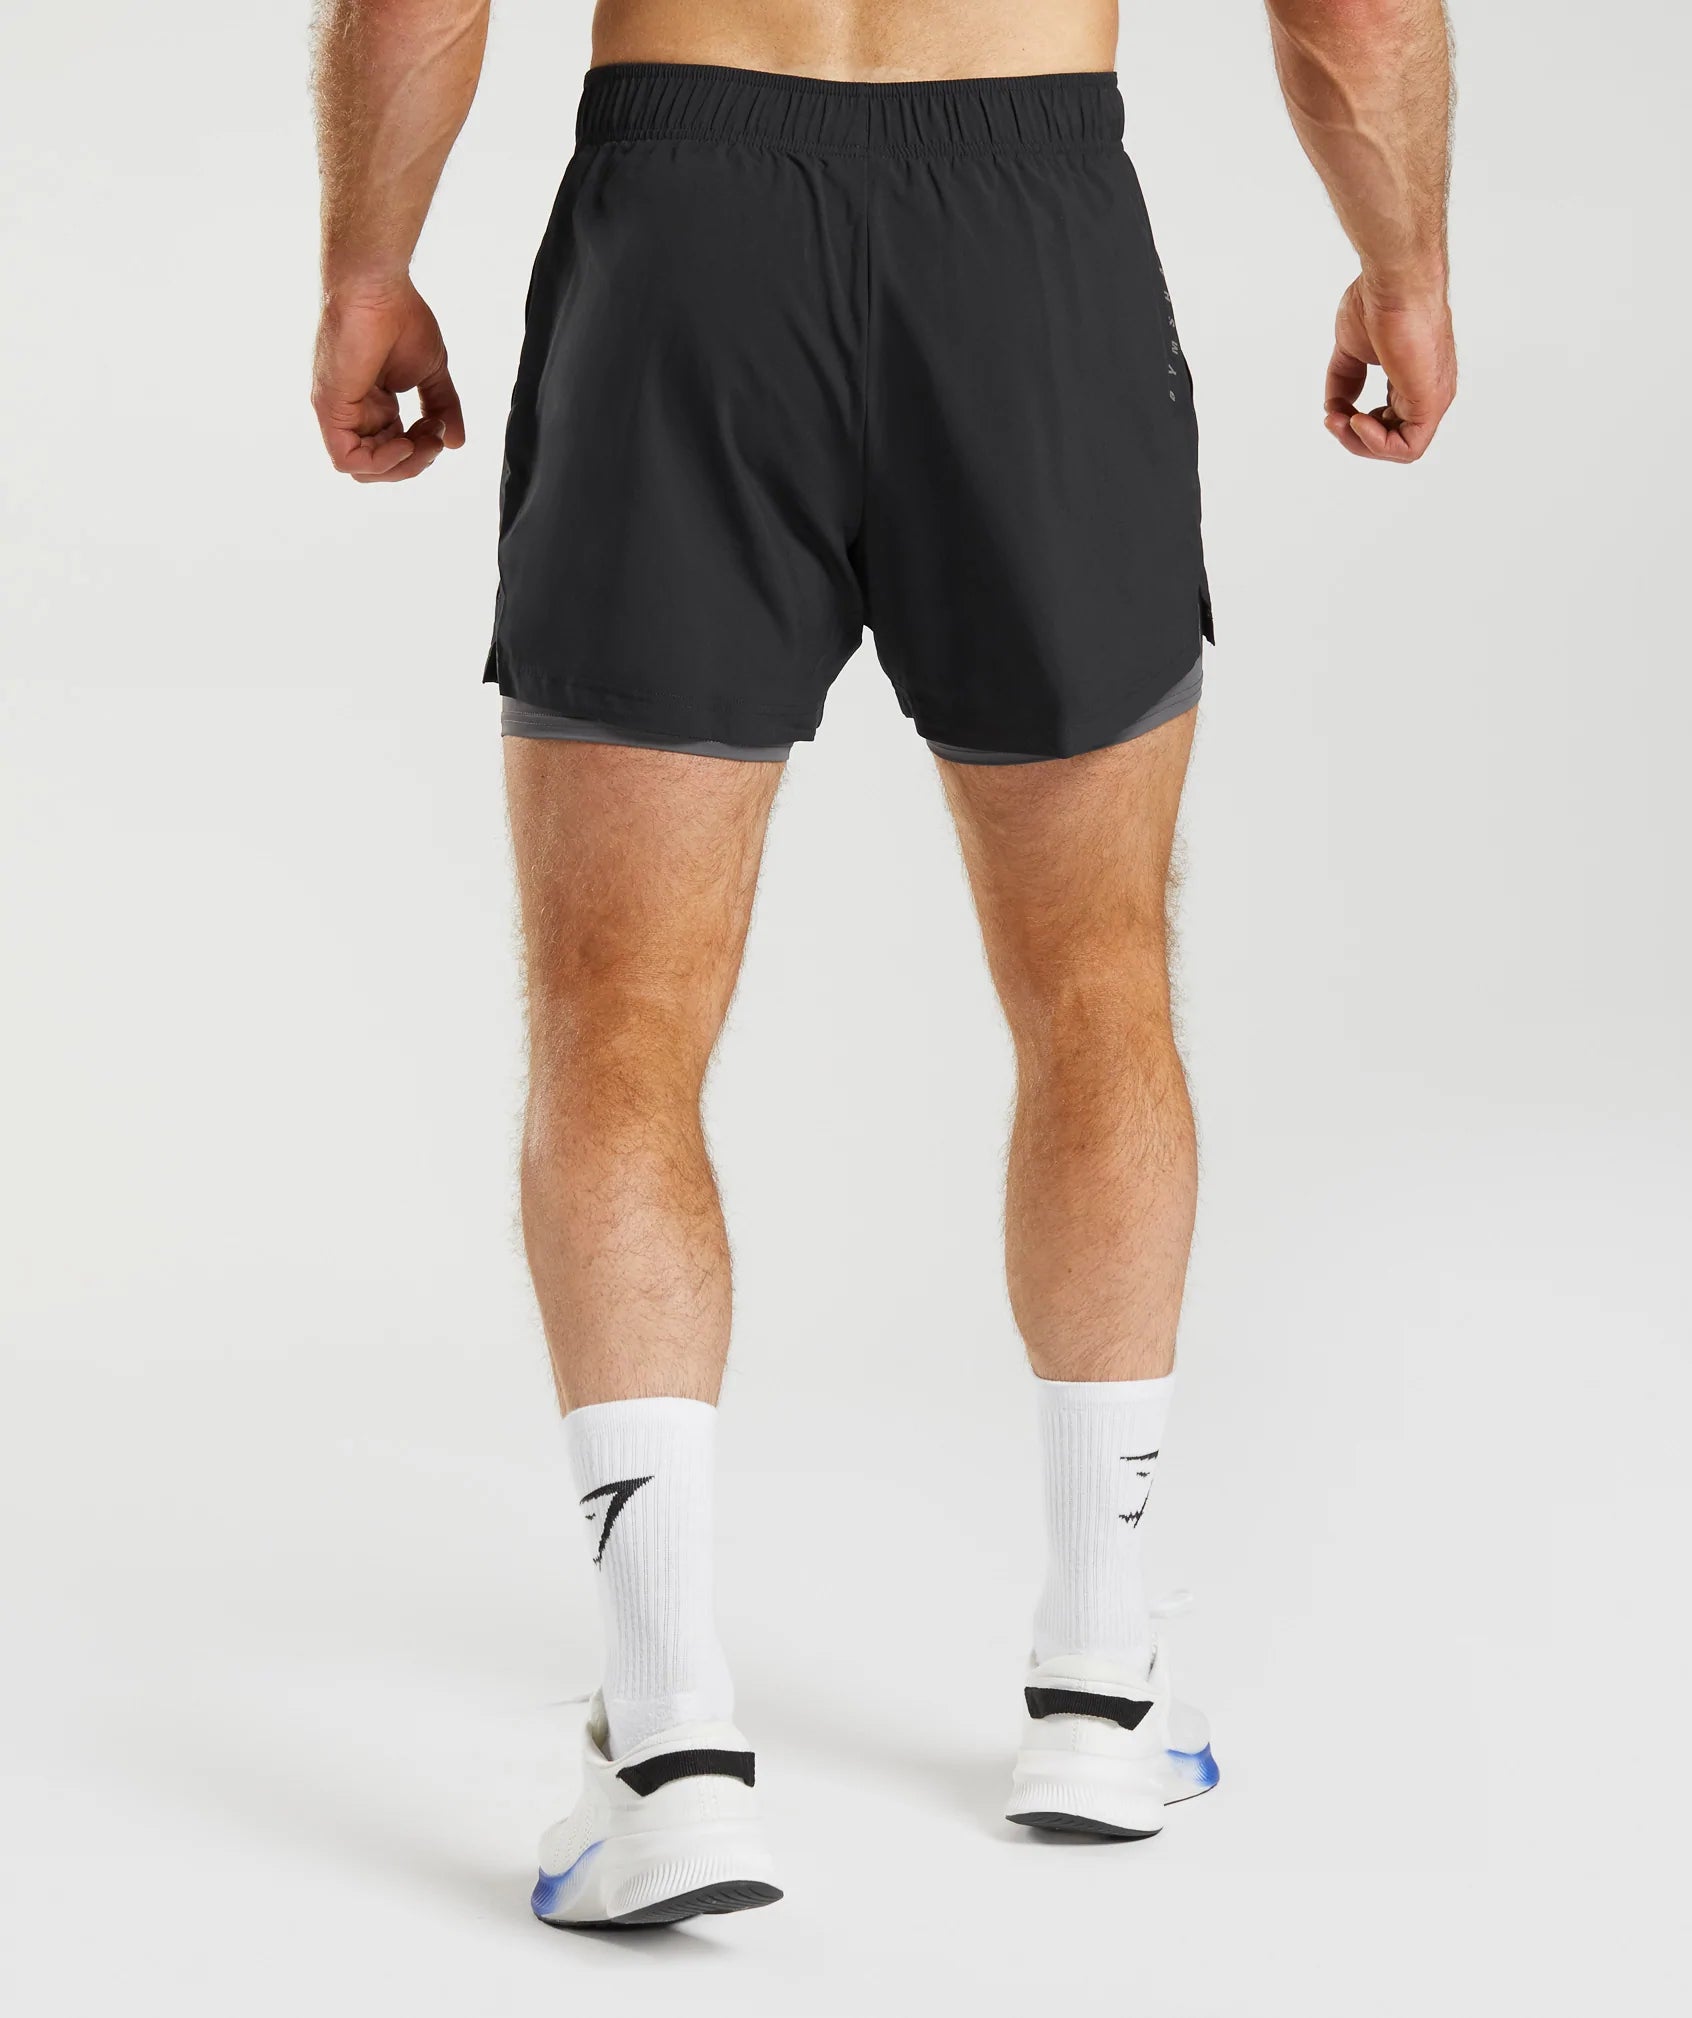 Gymshark Sport Shorts - Silhouette Grey/Black